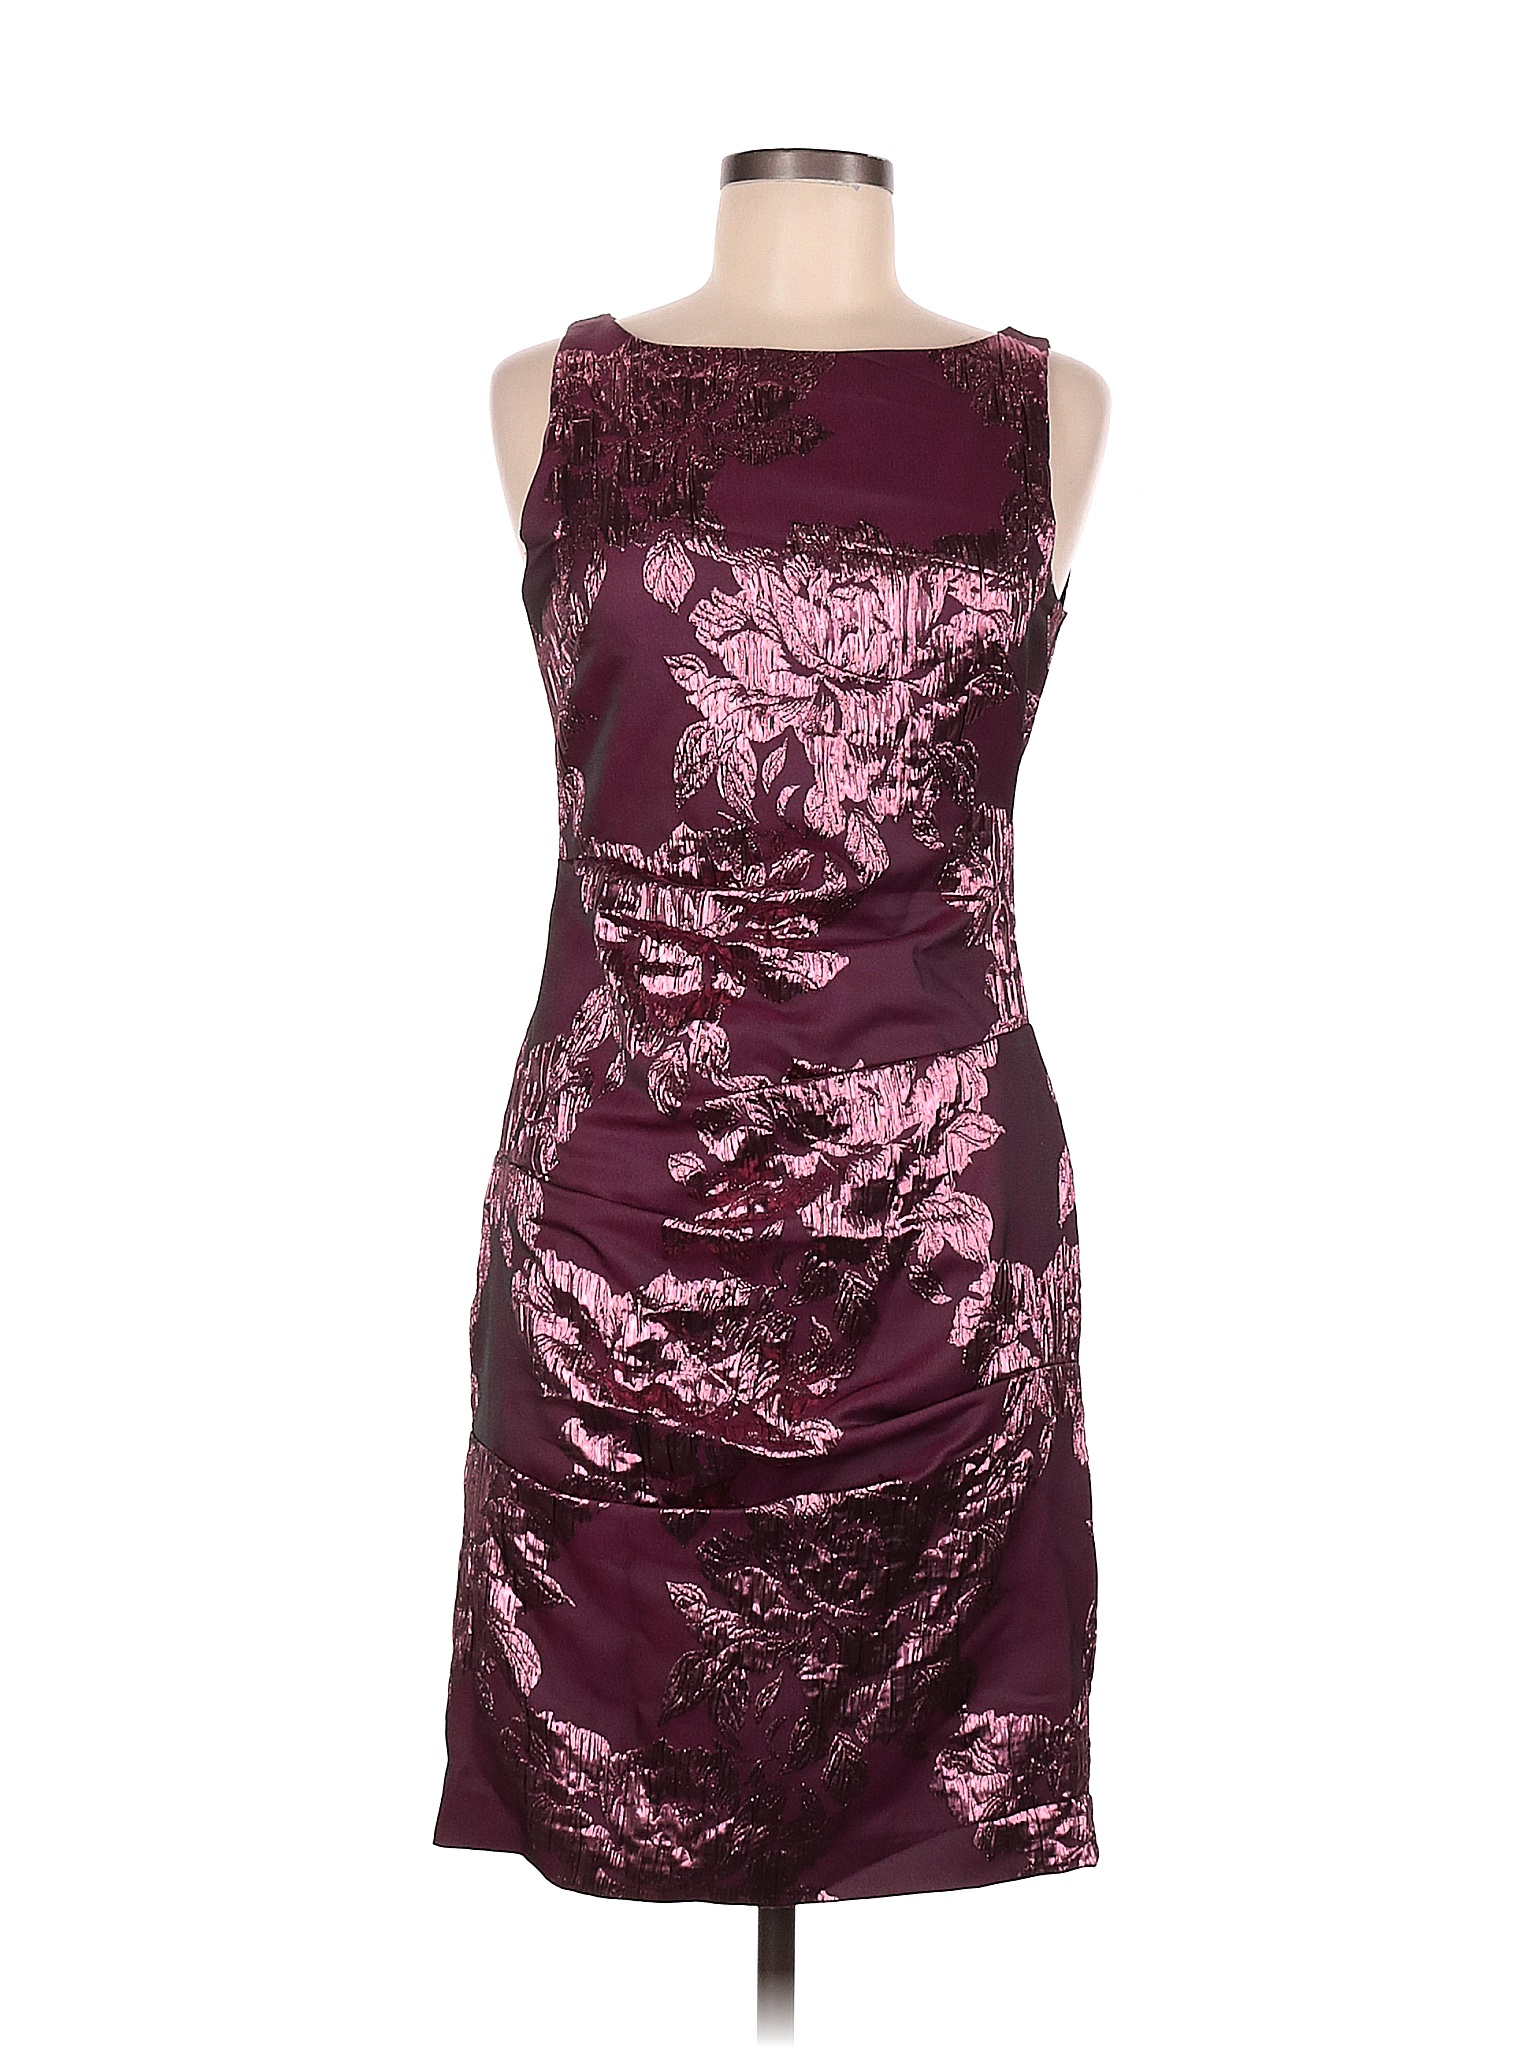 Aidan Mattox Colored Burgundy Cocktail Dress Size 6 - 80% off | thredUP